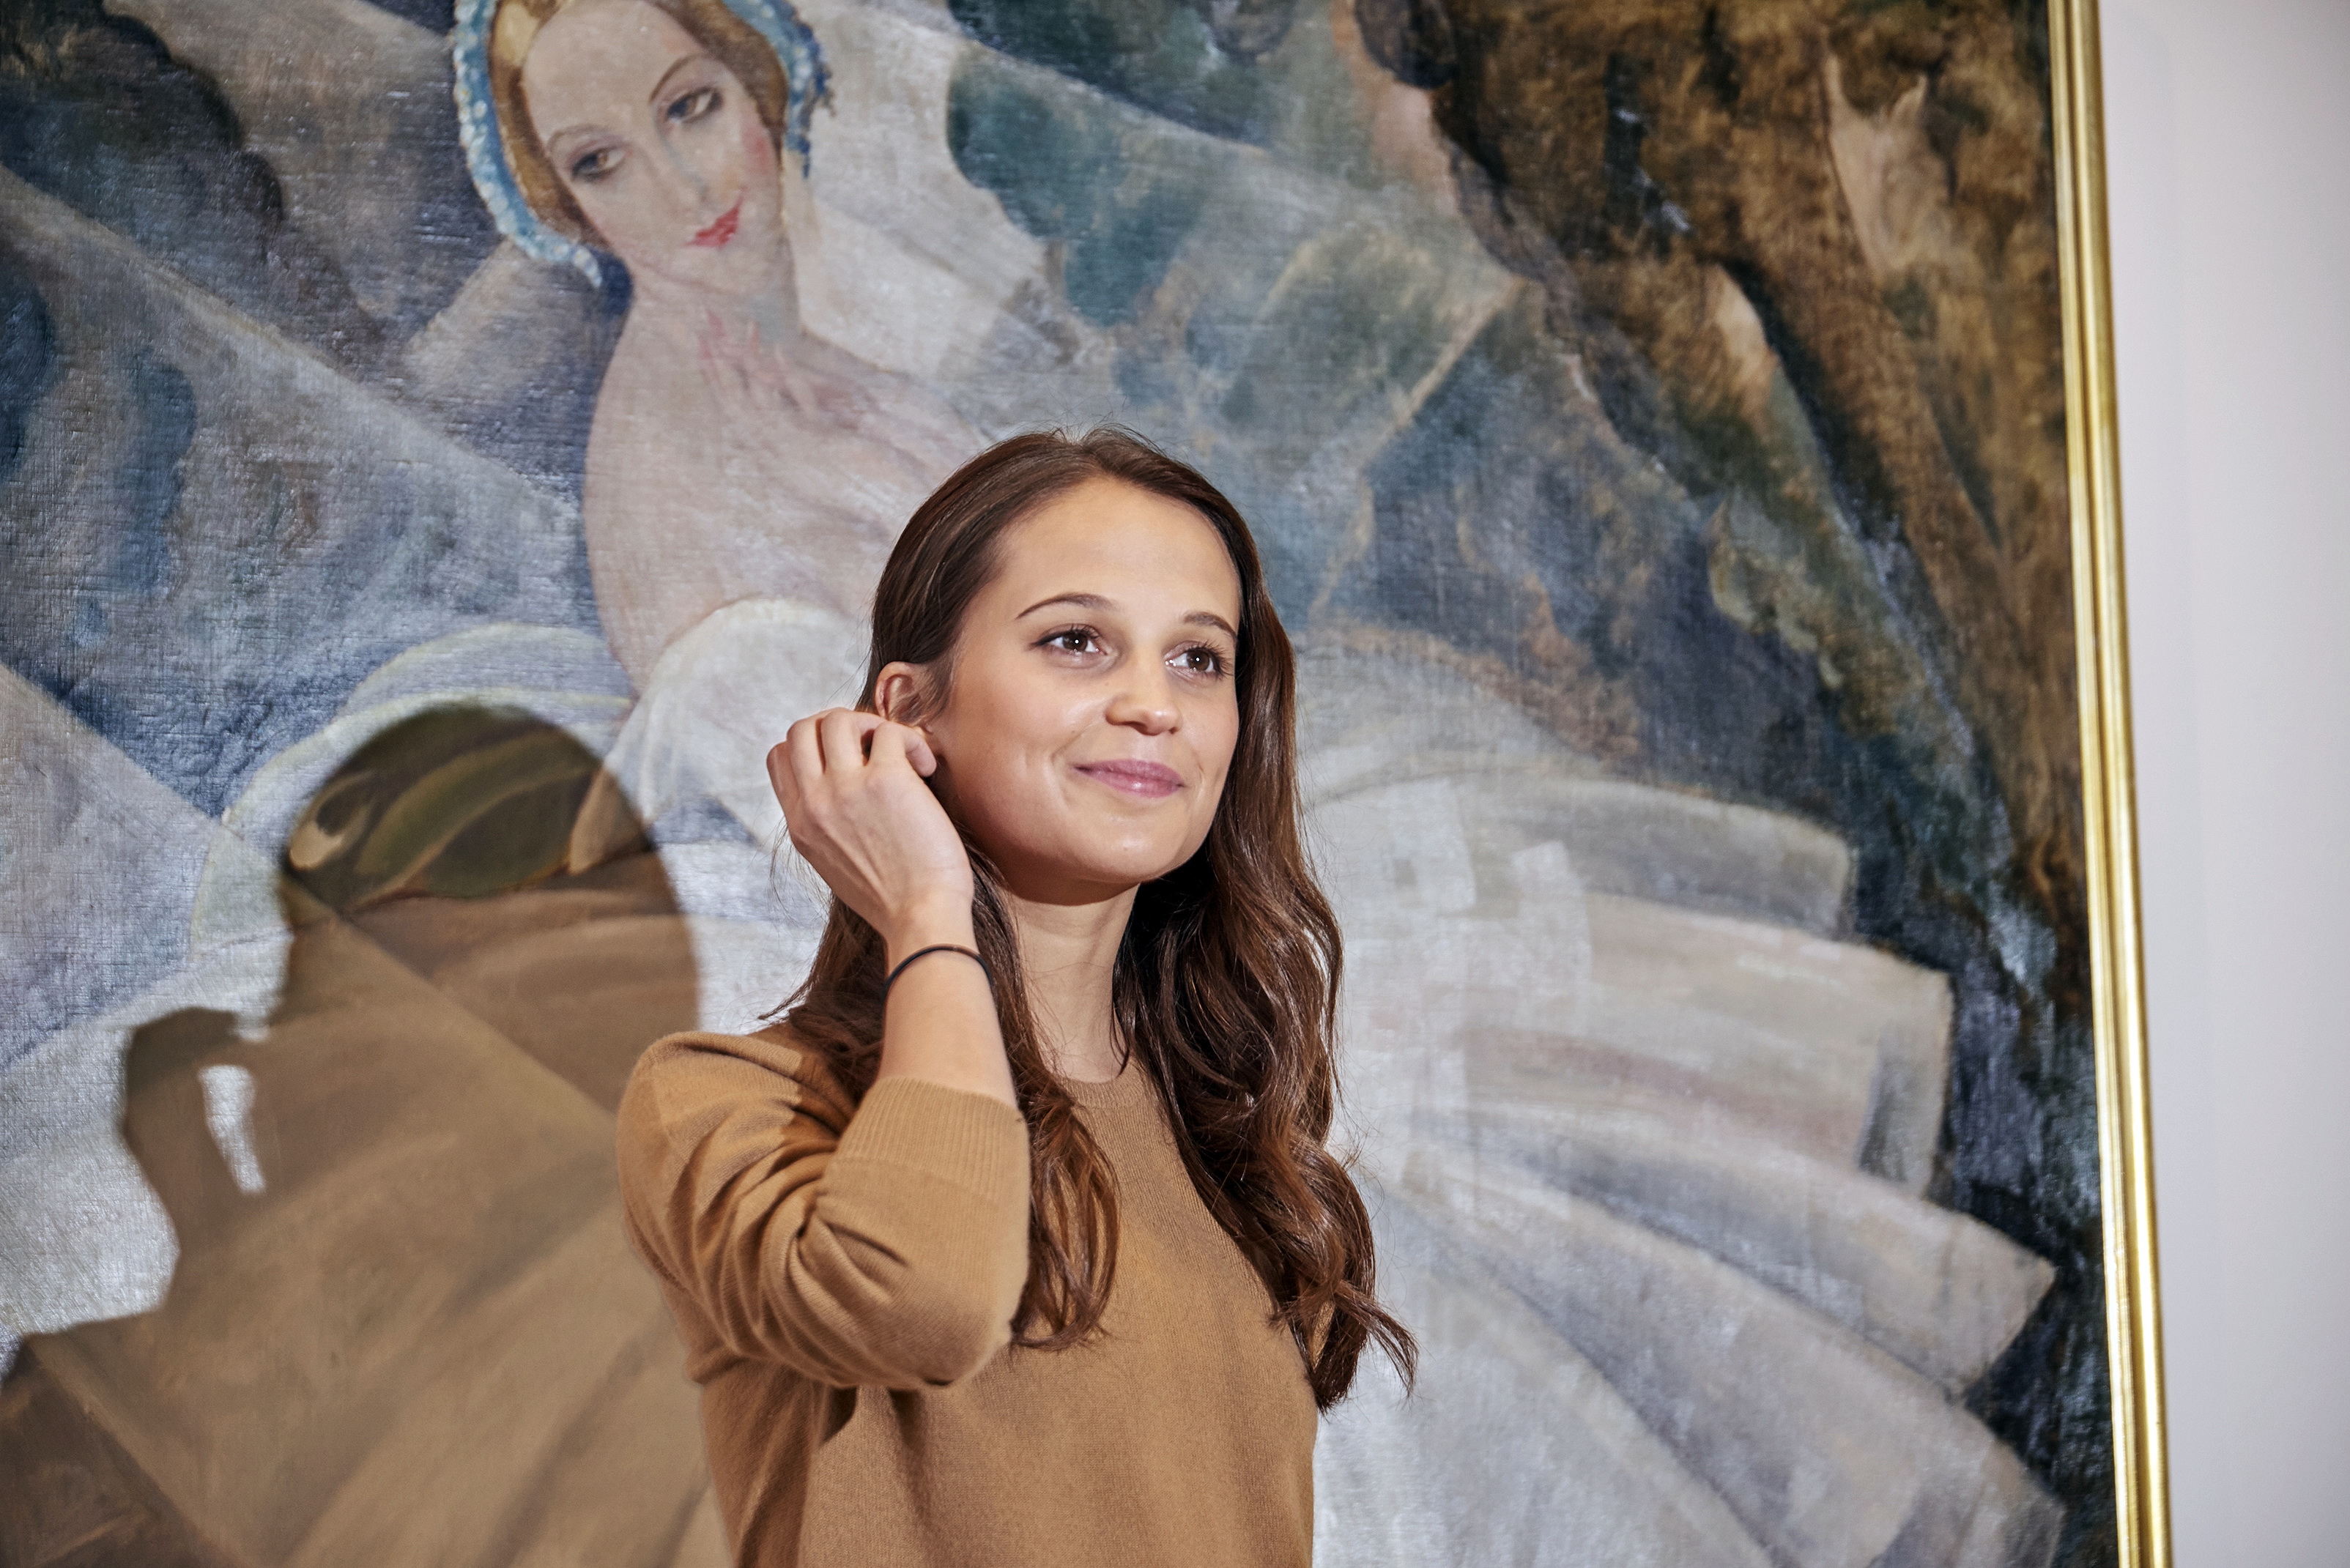 Alicia Vikander won a 2016 Oscar portraying artist Gerda Wegener in "The Danish Girl" film. [ARKEN Museum photo by Henrik Jauert].